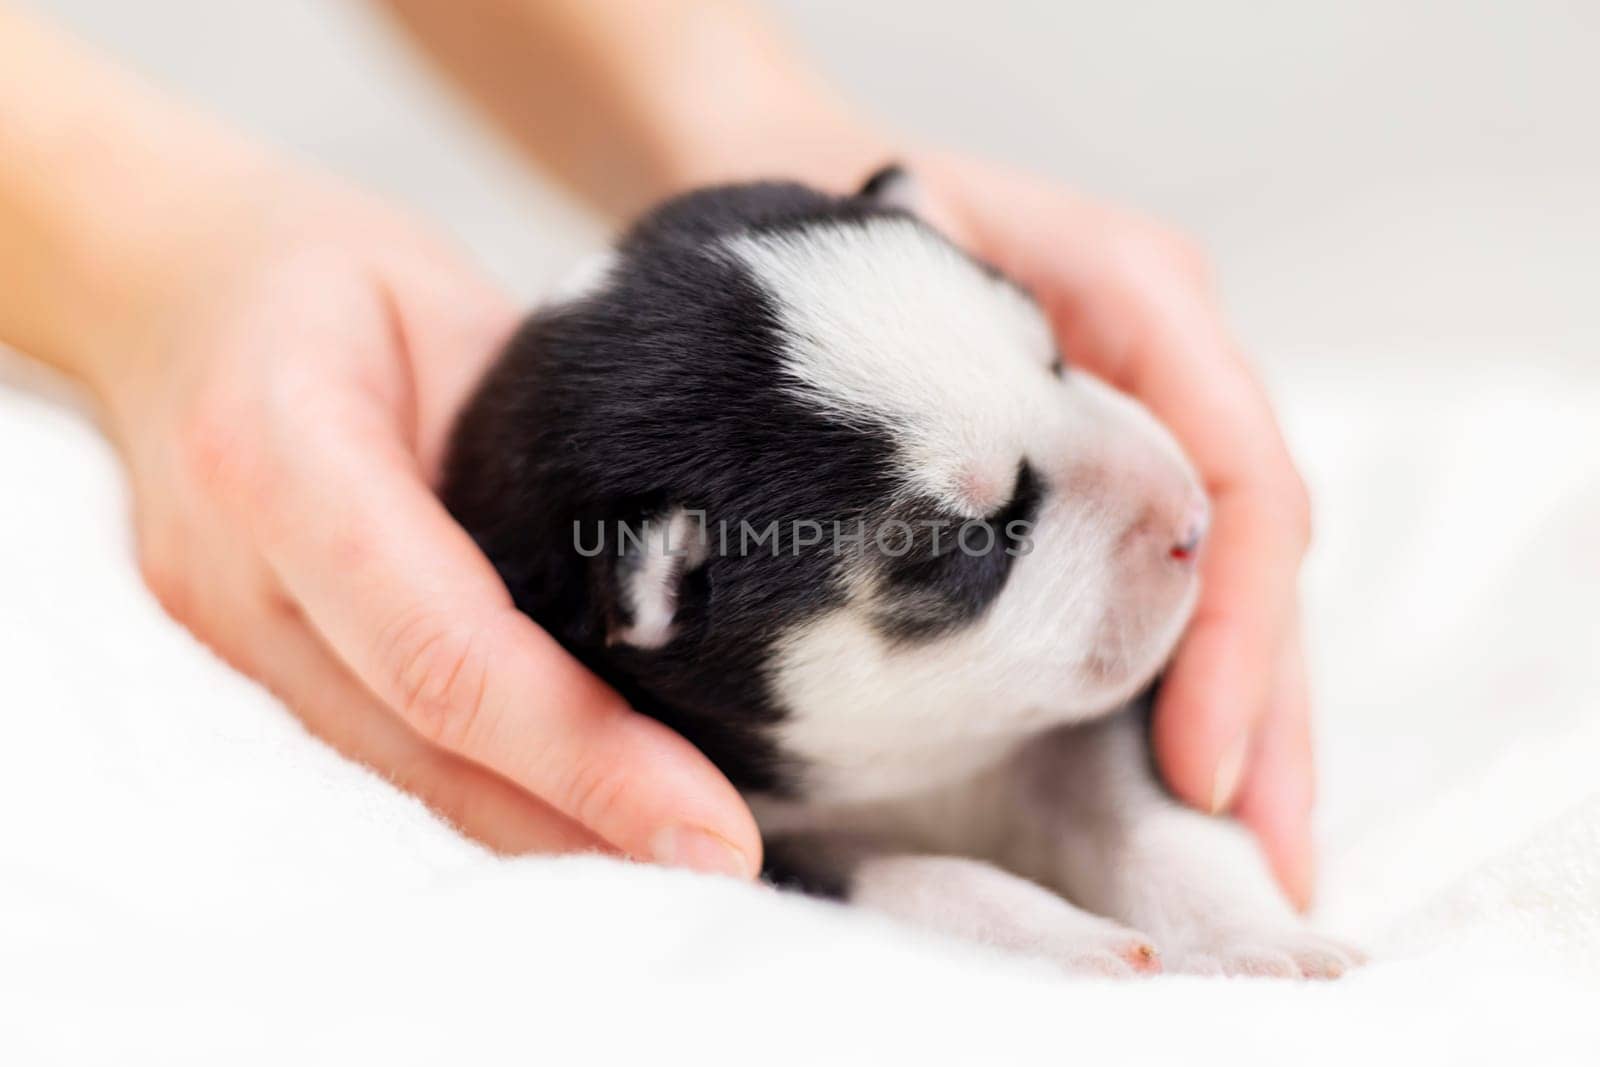 Newborn puppy held in human hands against a soft white blanket. Studio pet portrait.